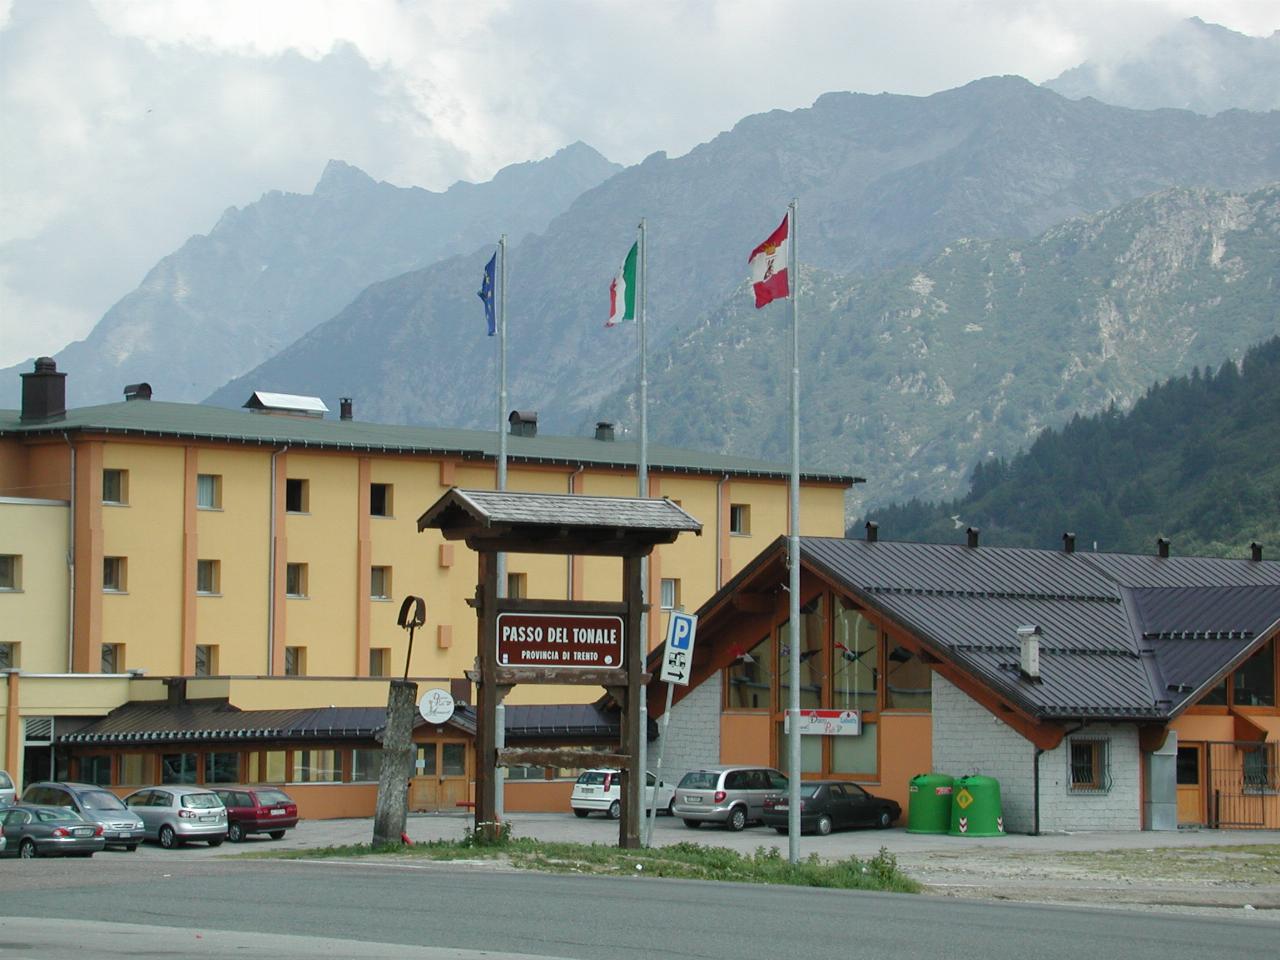 In the Dolomites, at Passo del Tonale